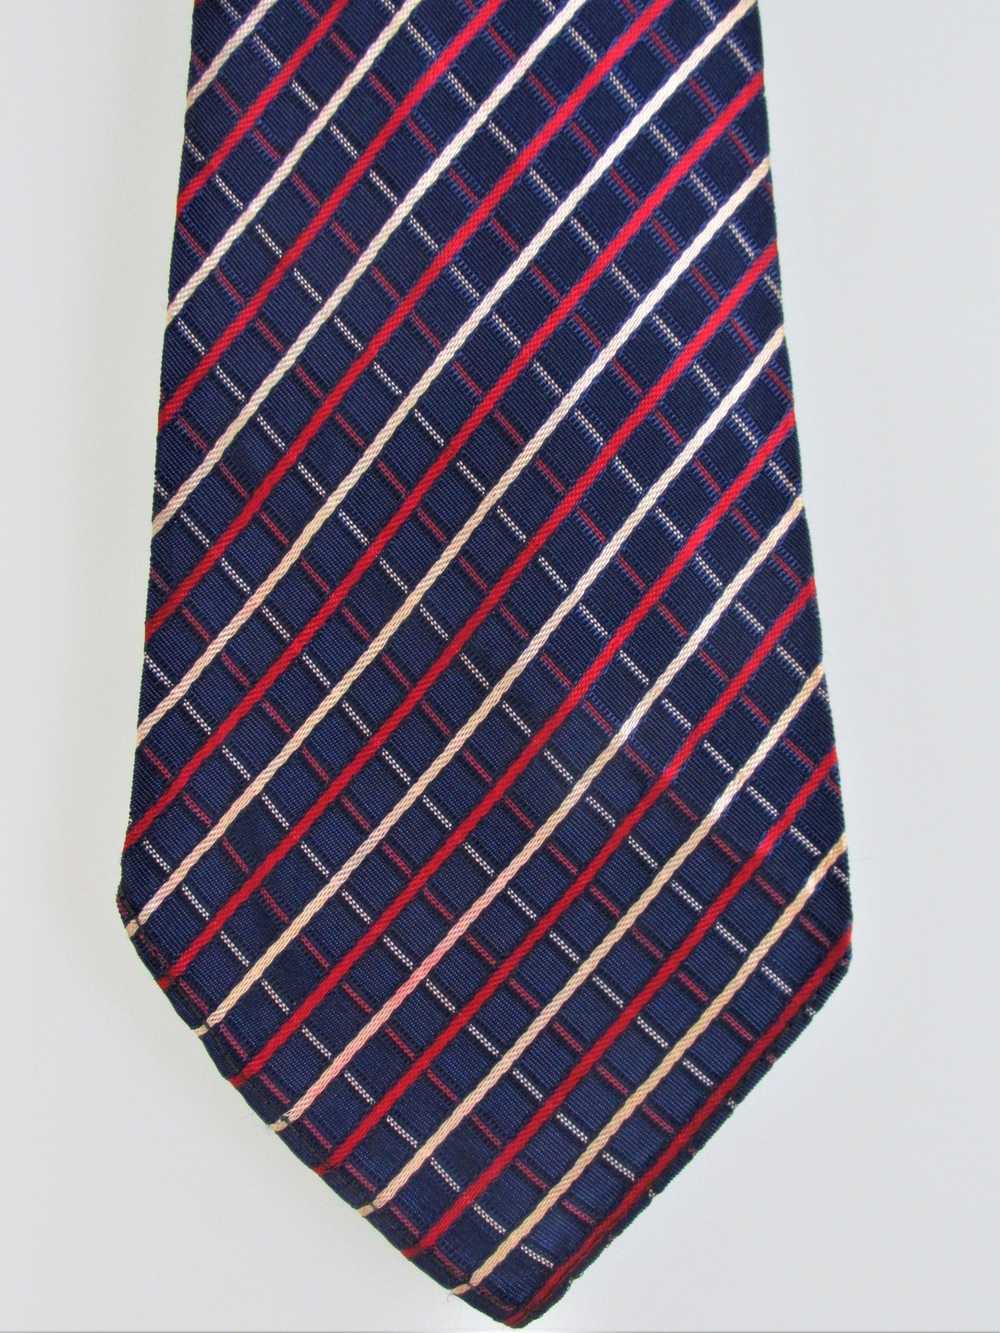 Haband Haband Vintage Men's Rayon Tie - image 3